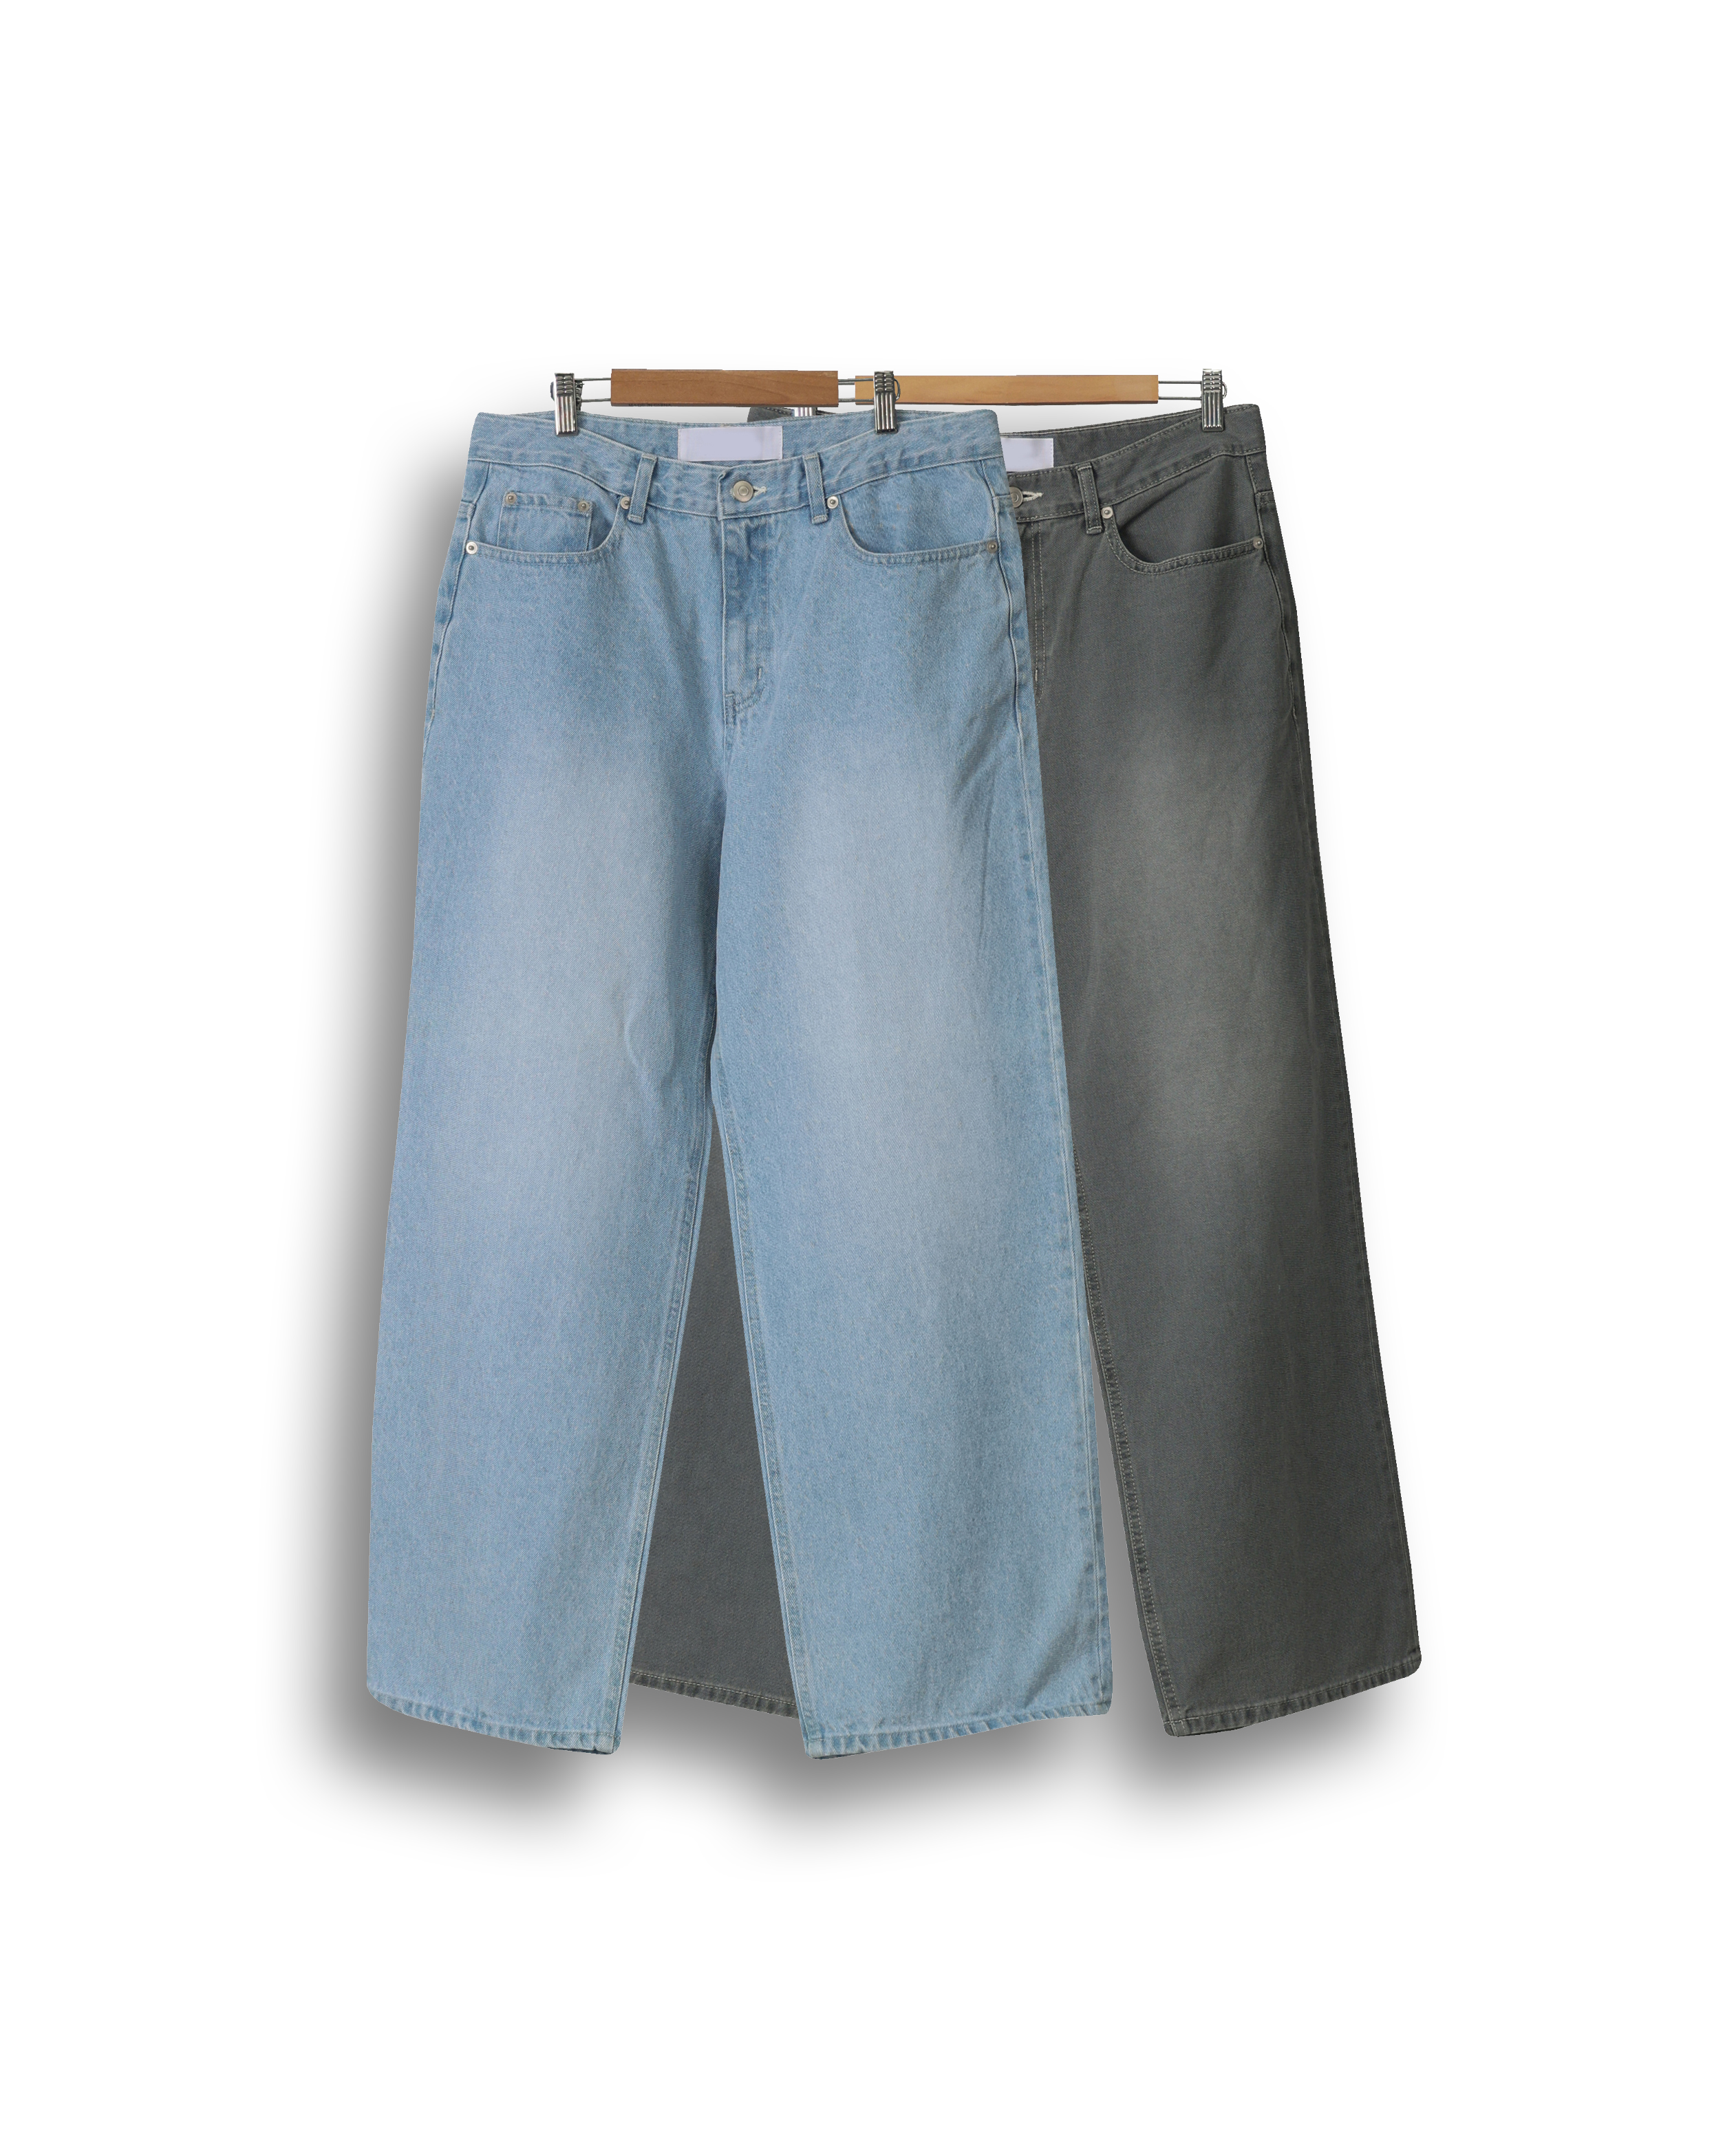 RED 9394 Washed Loose Fit Denim Pants (Light Gray/Light Blue)